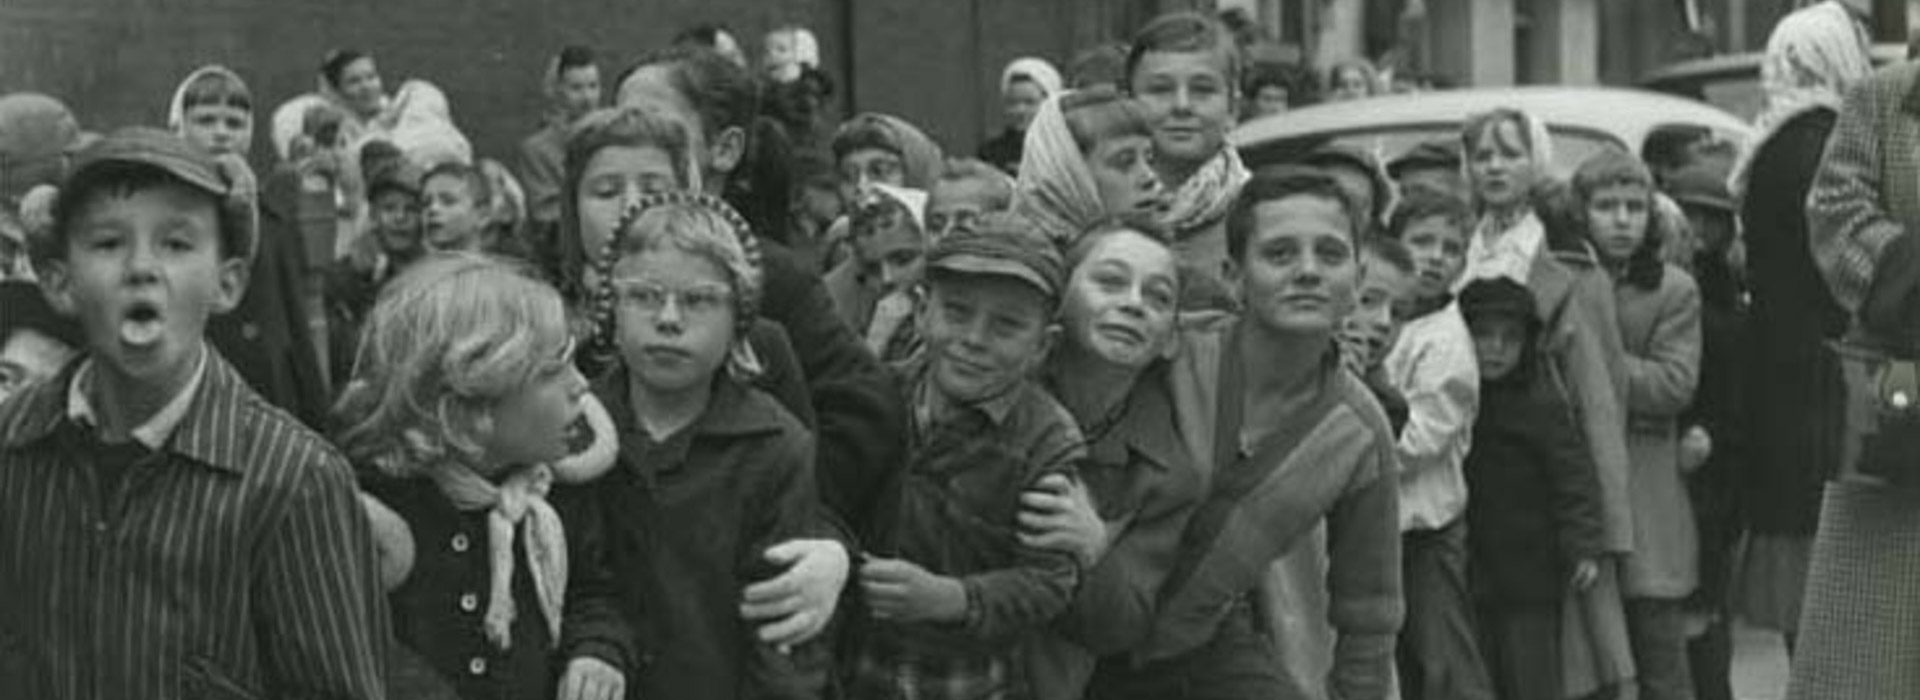 children waiting in line in 1940s Springfield